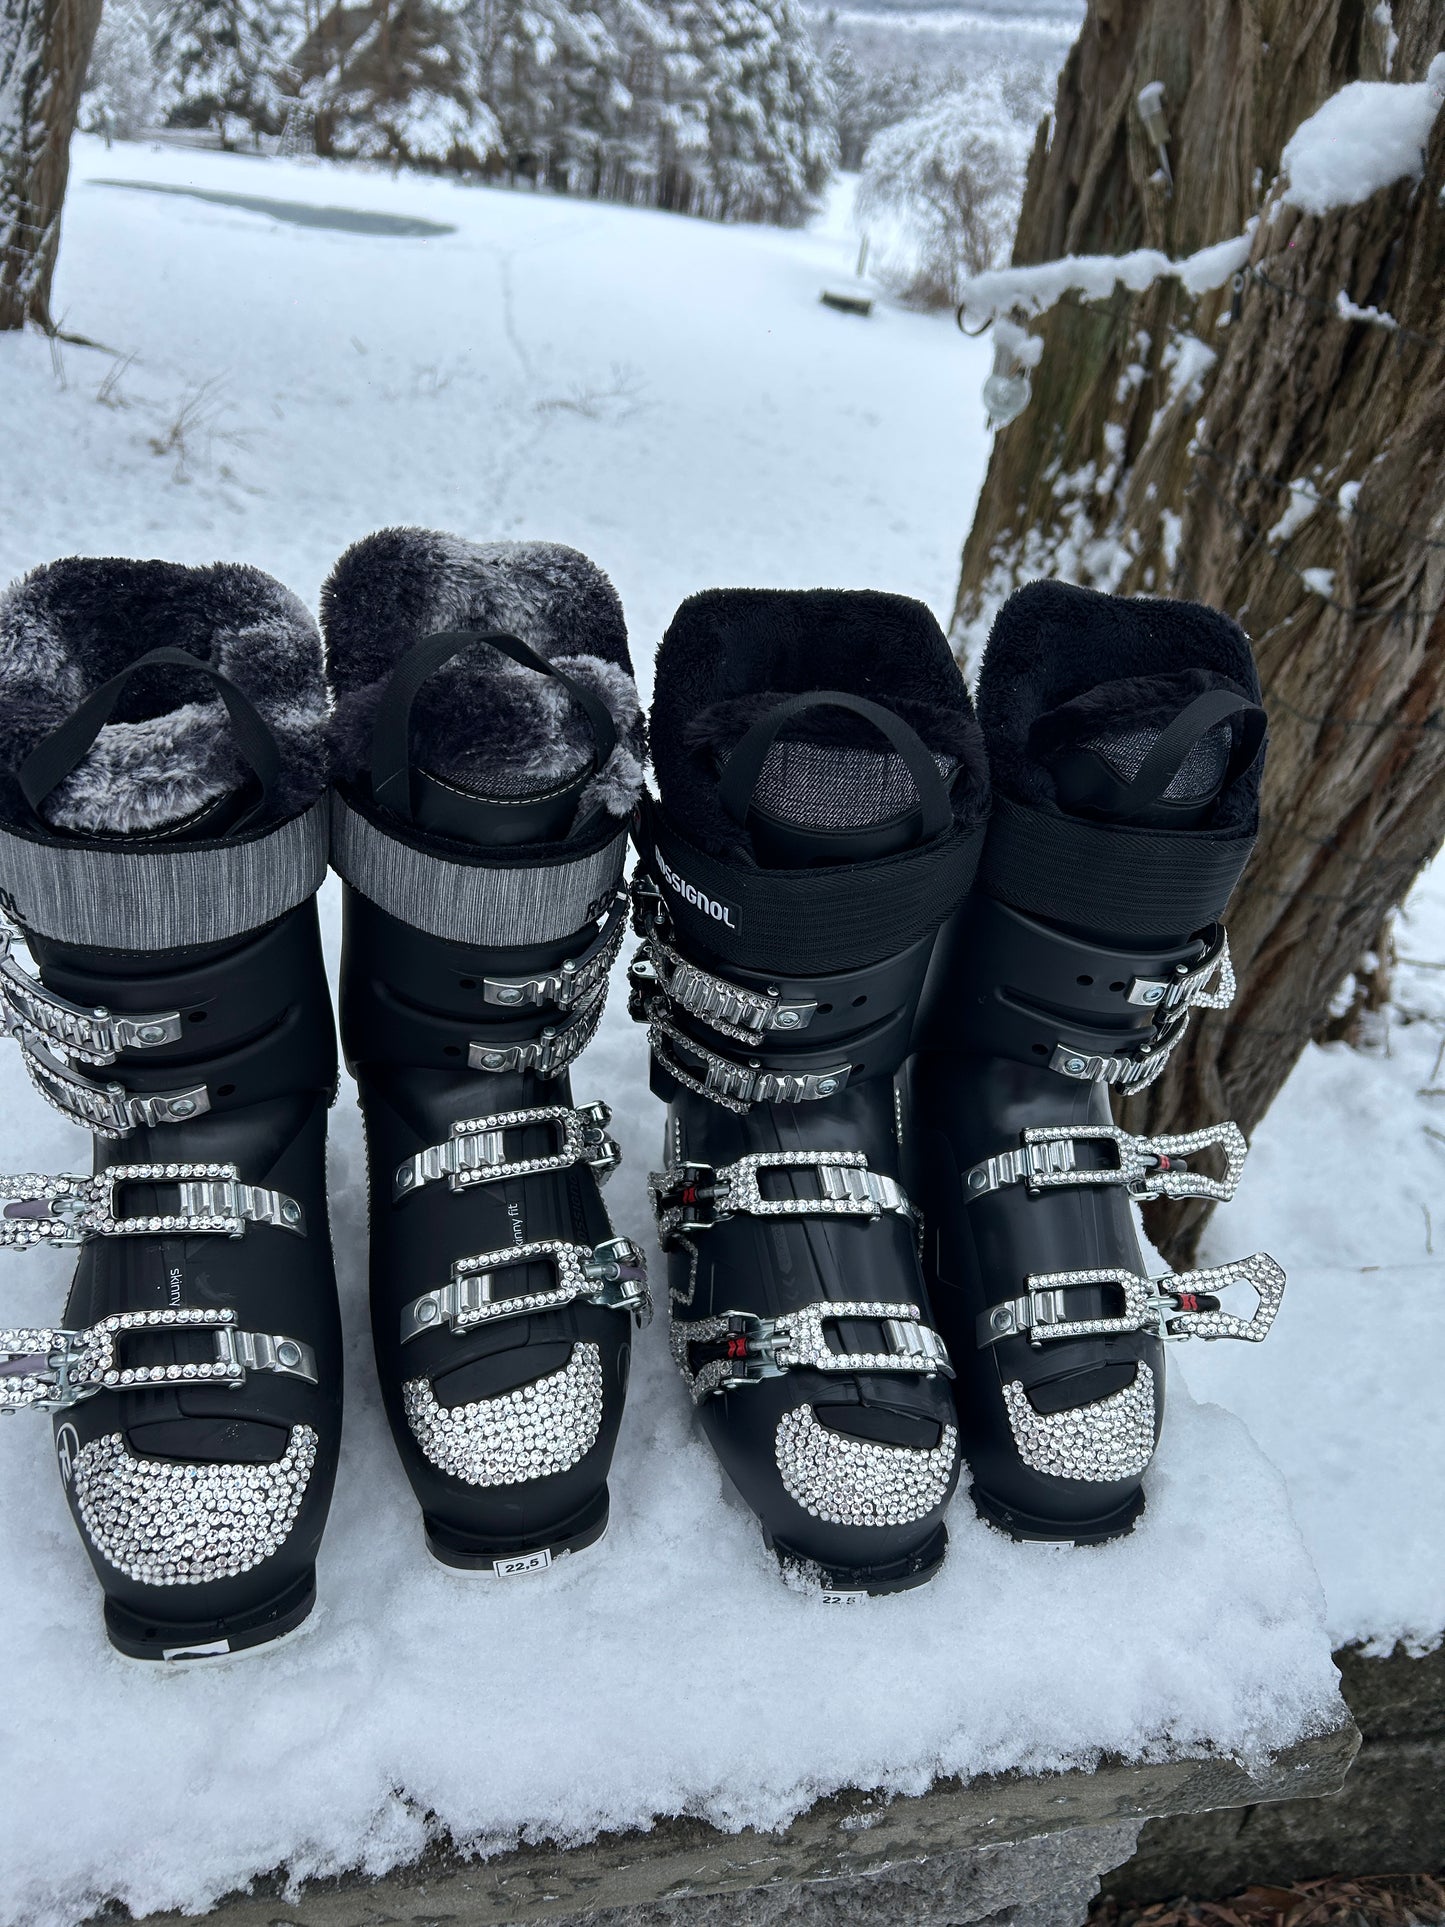 Custom Swarovski Ski Boots